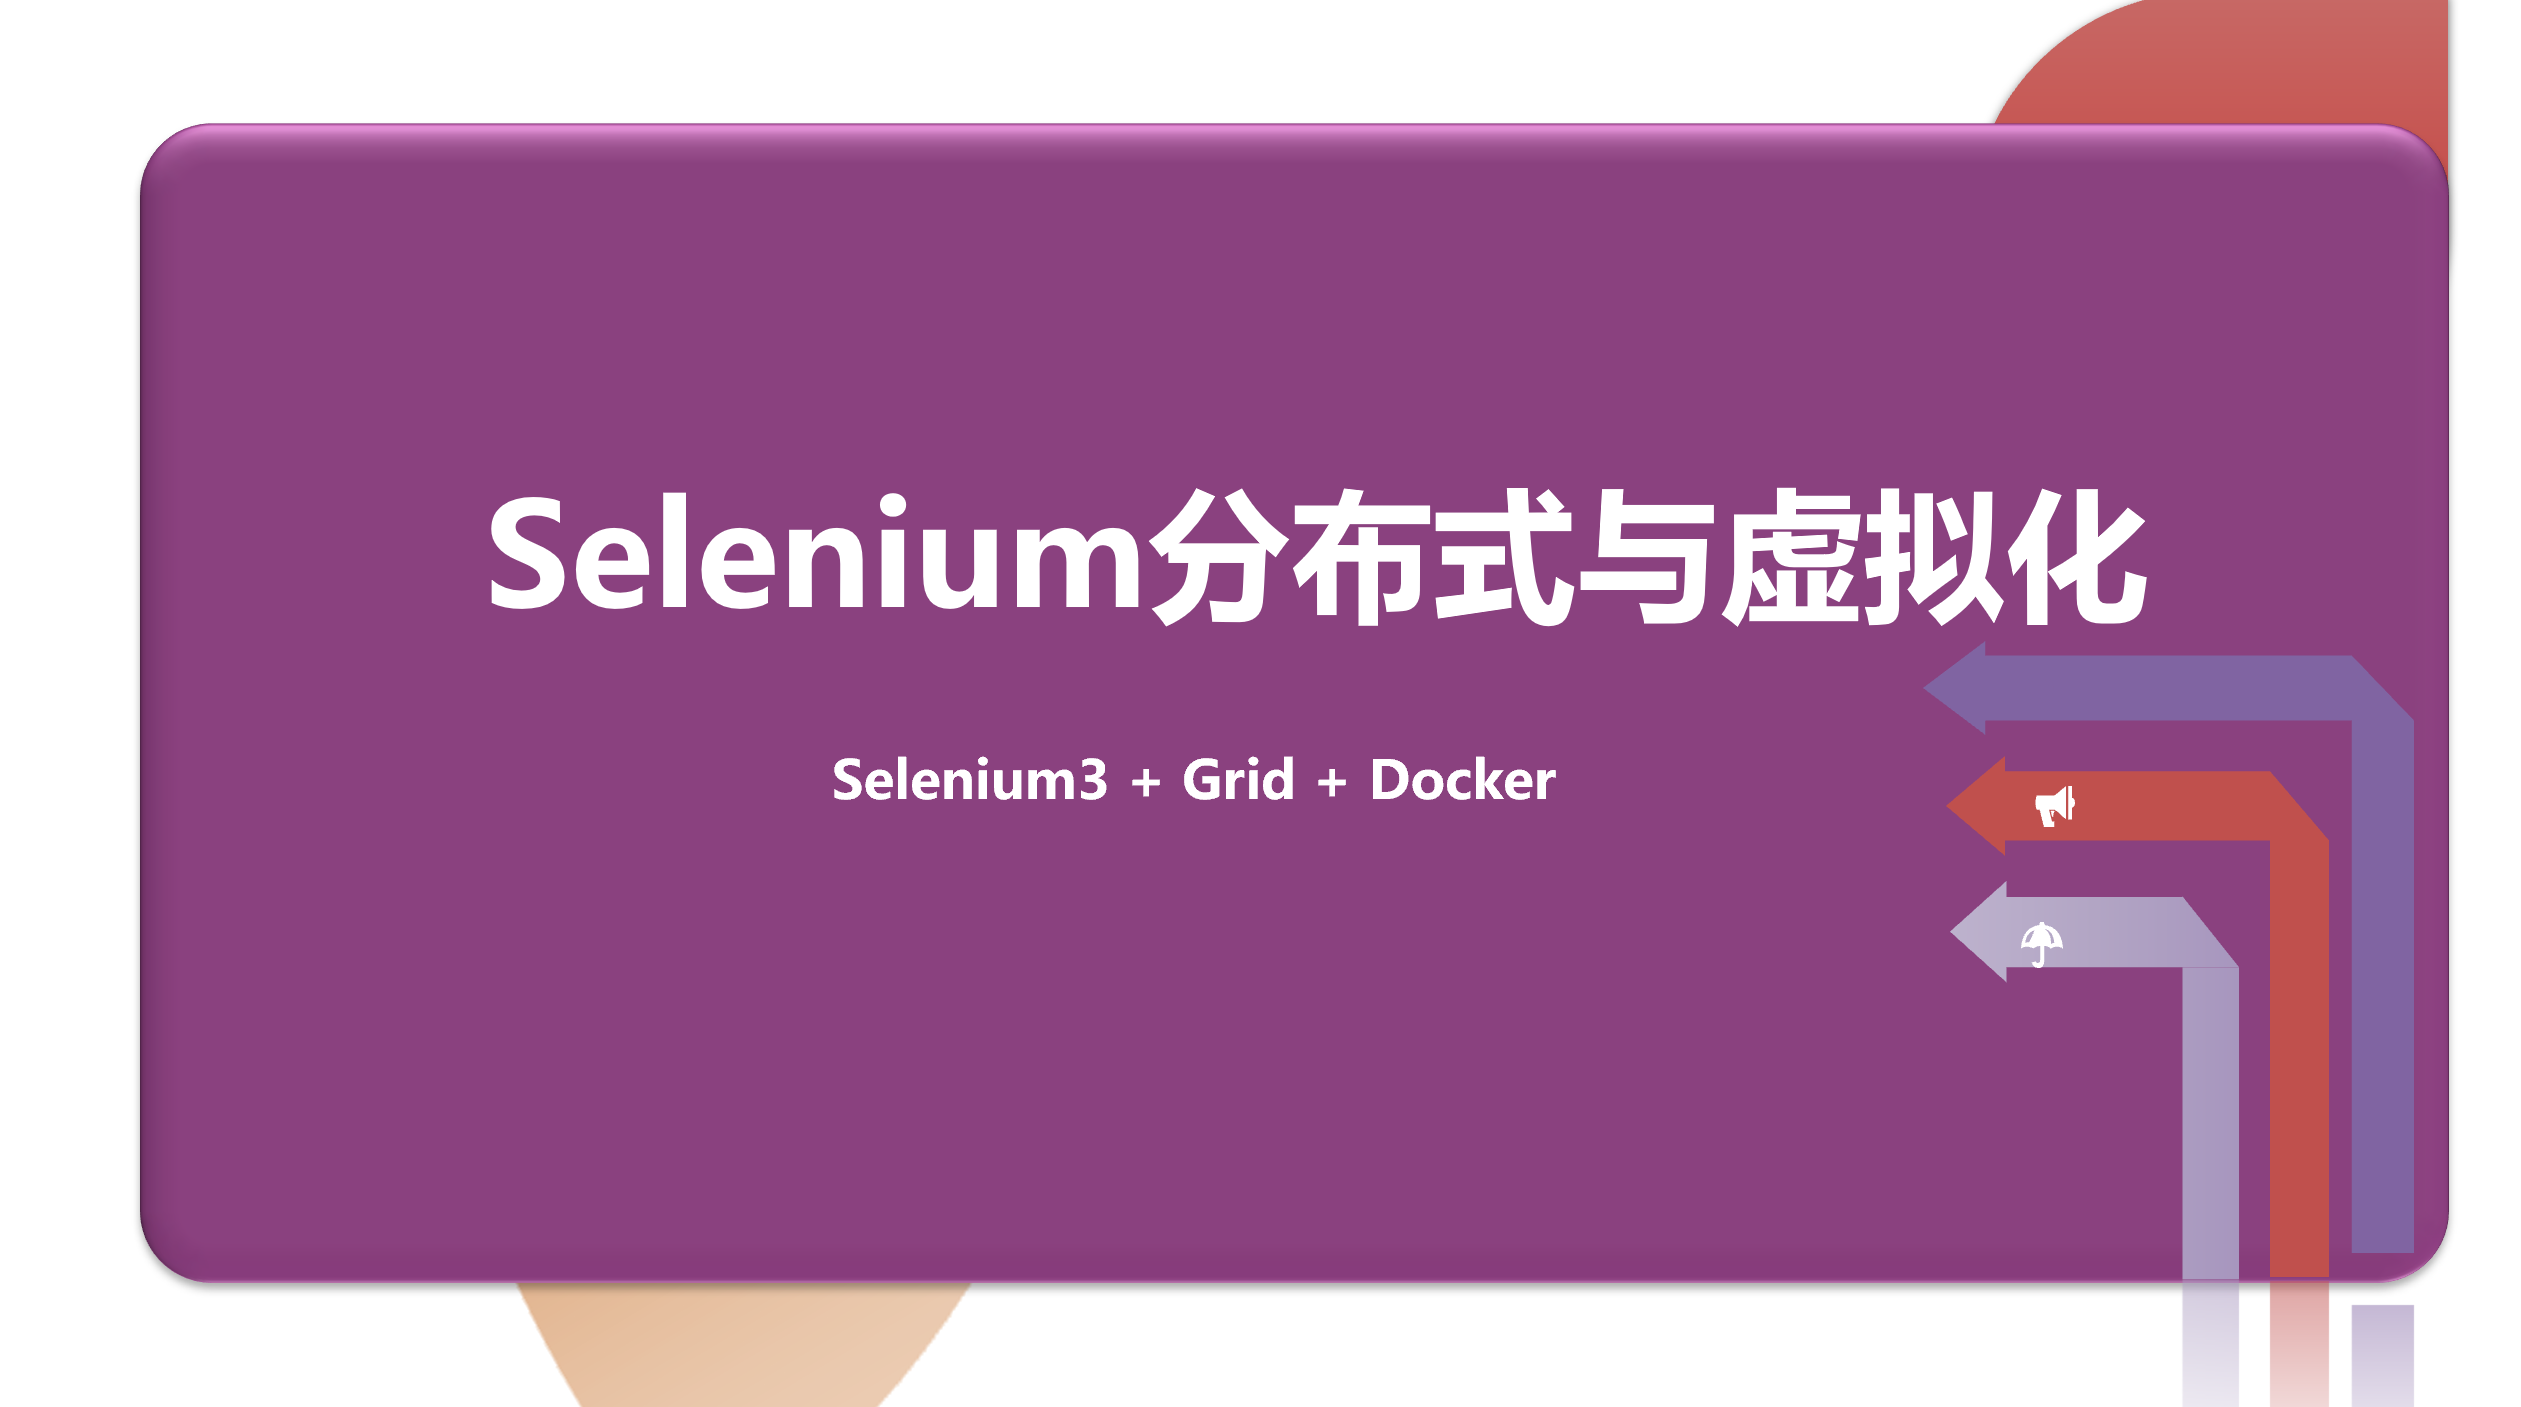 Selenium3分布式与虚拟化